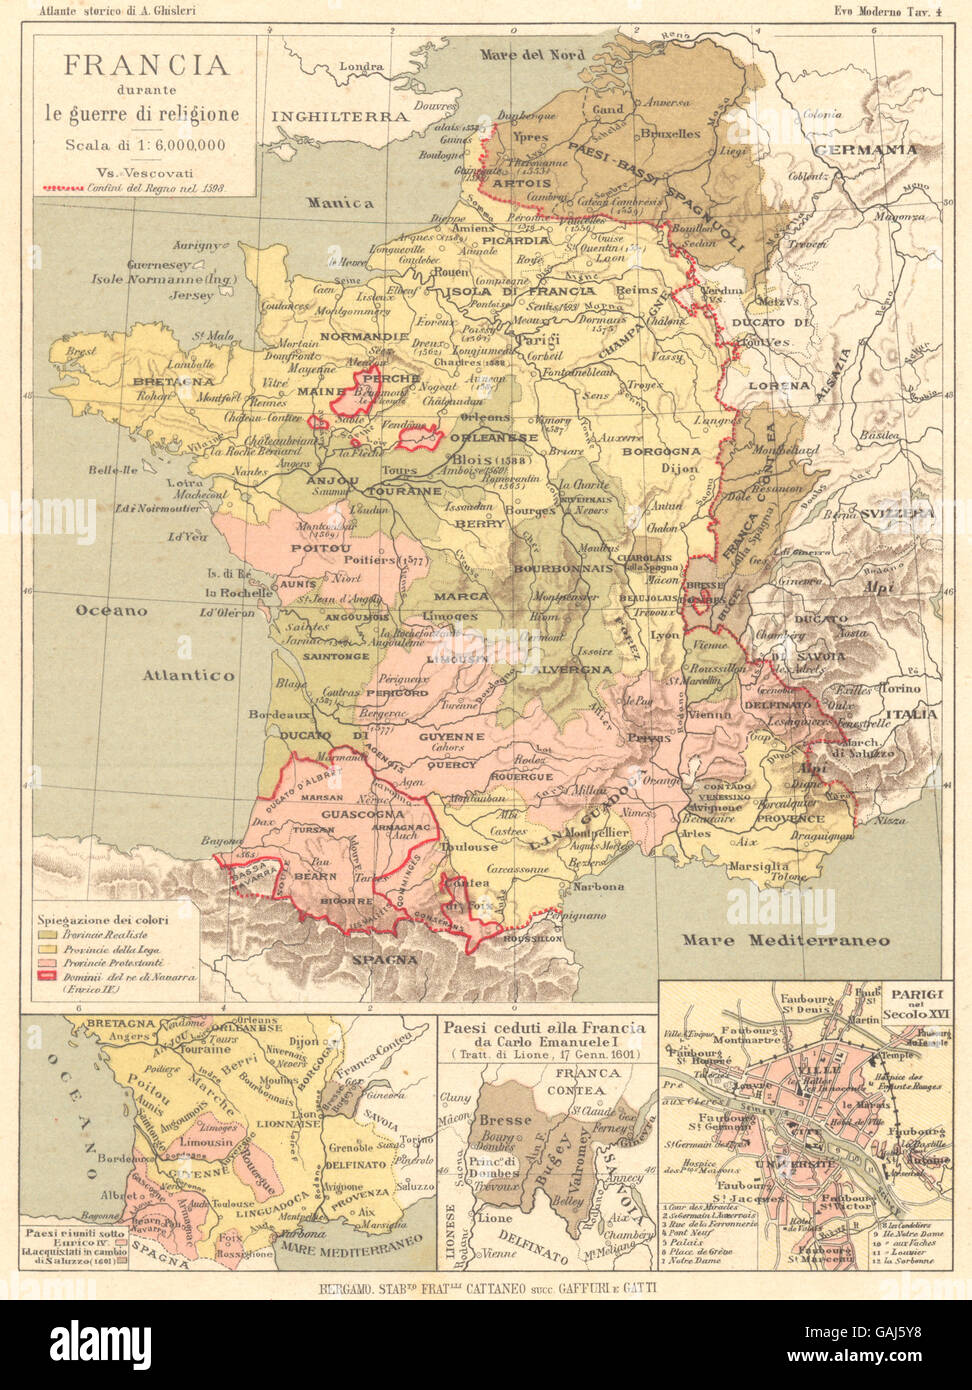 FRANCIA : guerra religione ; Carlo Emanuele ; Parigi(Paris)Secolo 16, 1889 map Banque D'Images